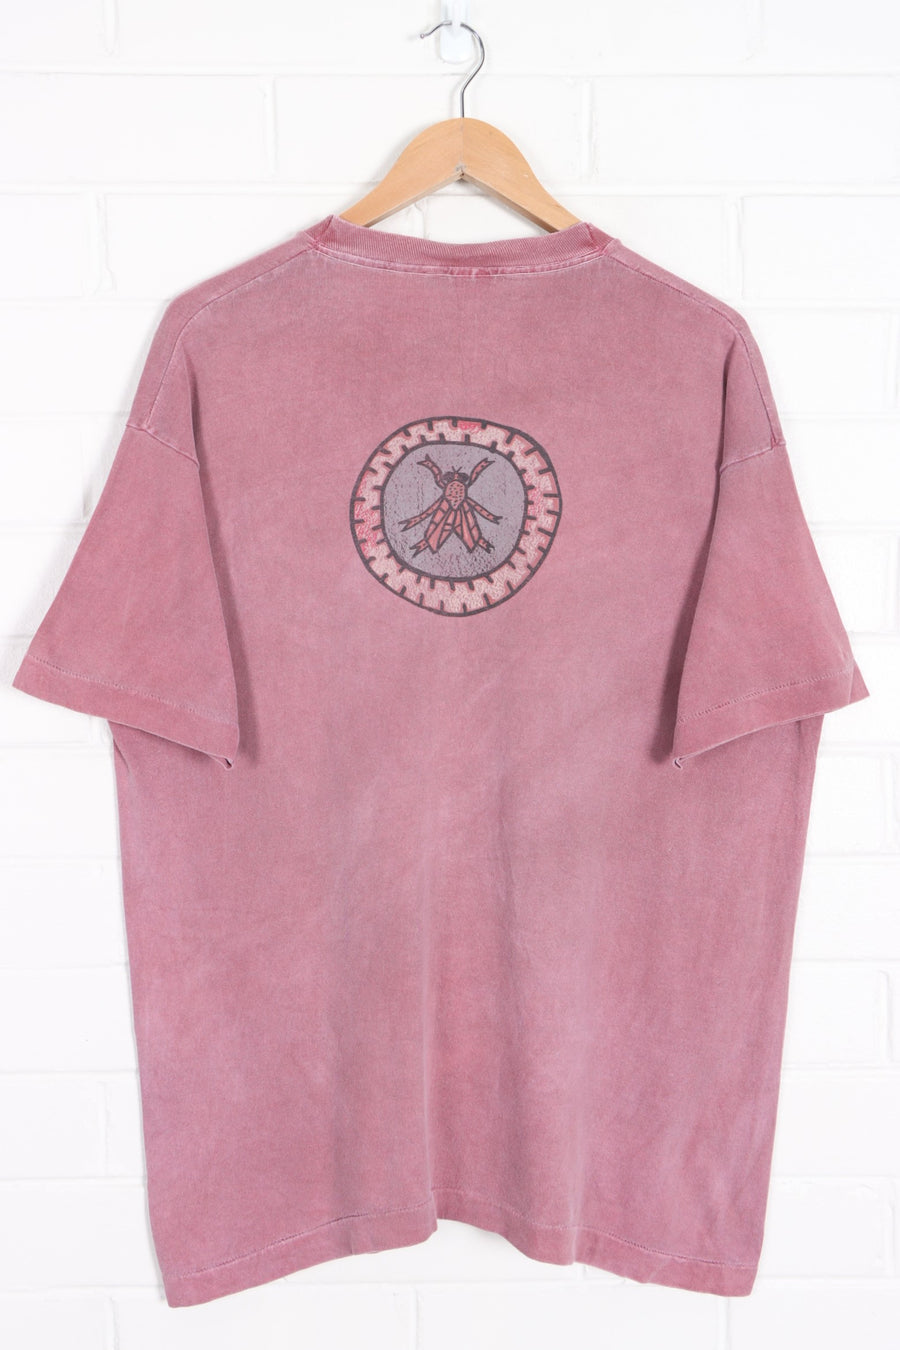 Alice In Chains 1994 'Jar of Flies' Single Stitch T-Shirt (L) - Vintage Sole Melbourne